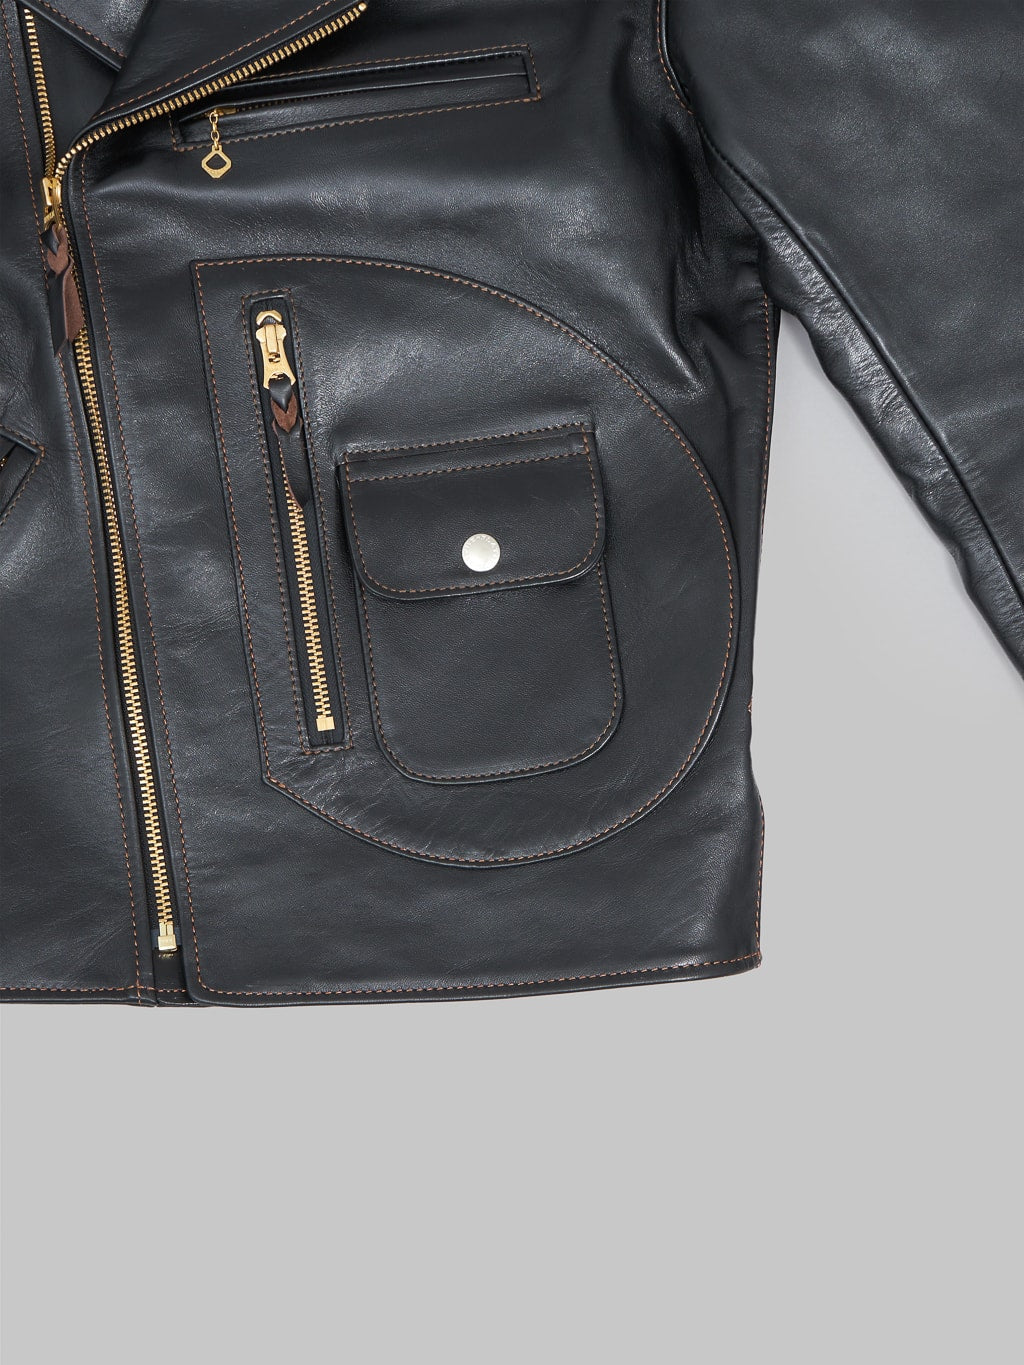 The Flat Head Horsehide leather double Riders Jacket Black Semi Aniline pocket